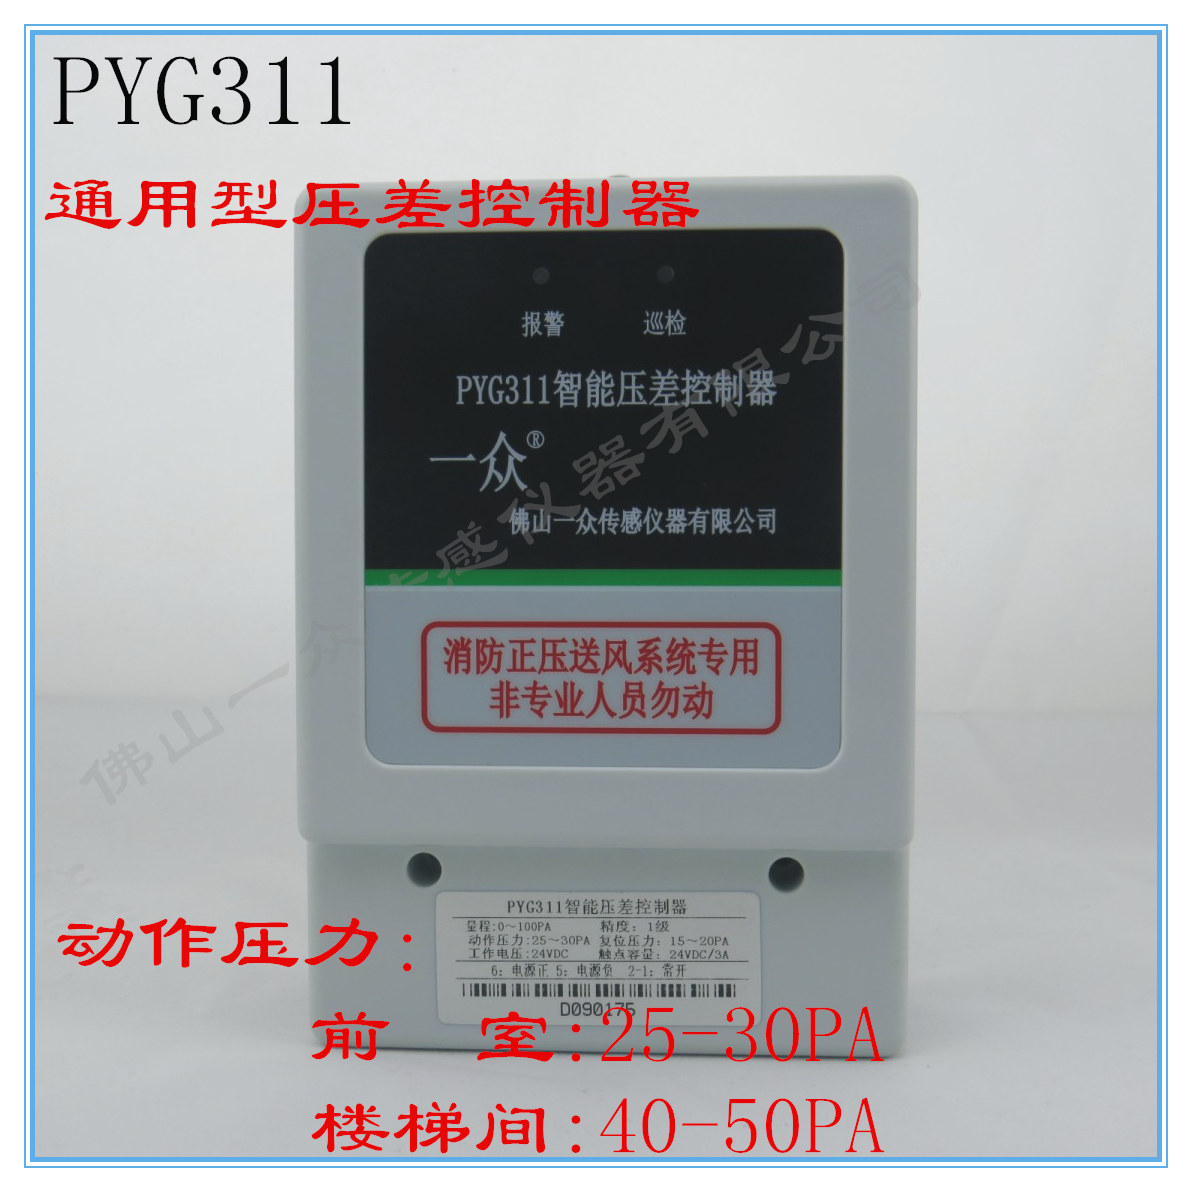 PYG311-1产品发布图.jpg